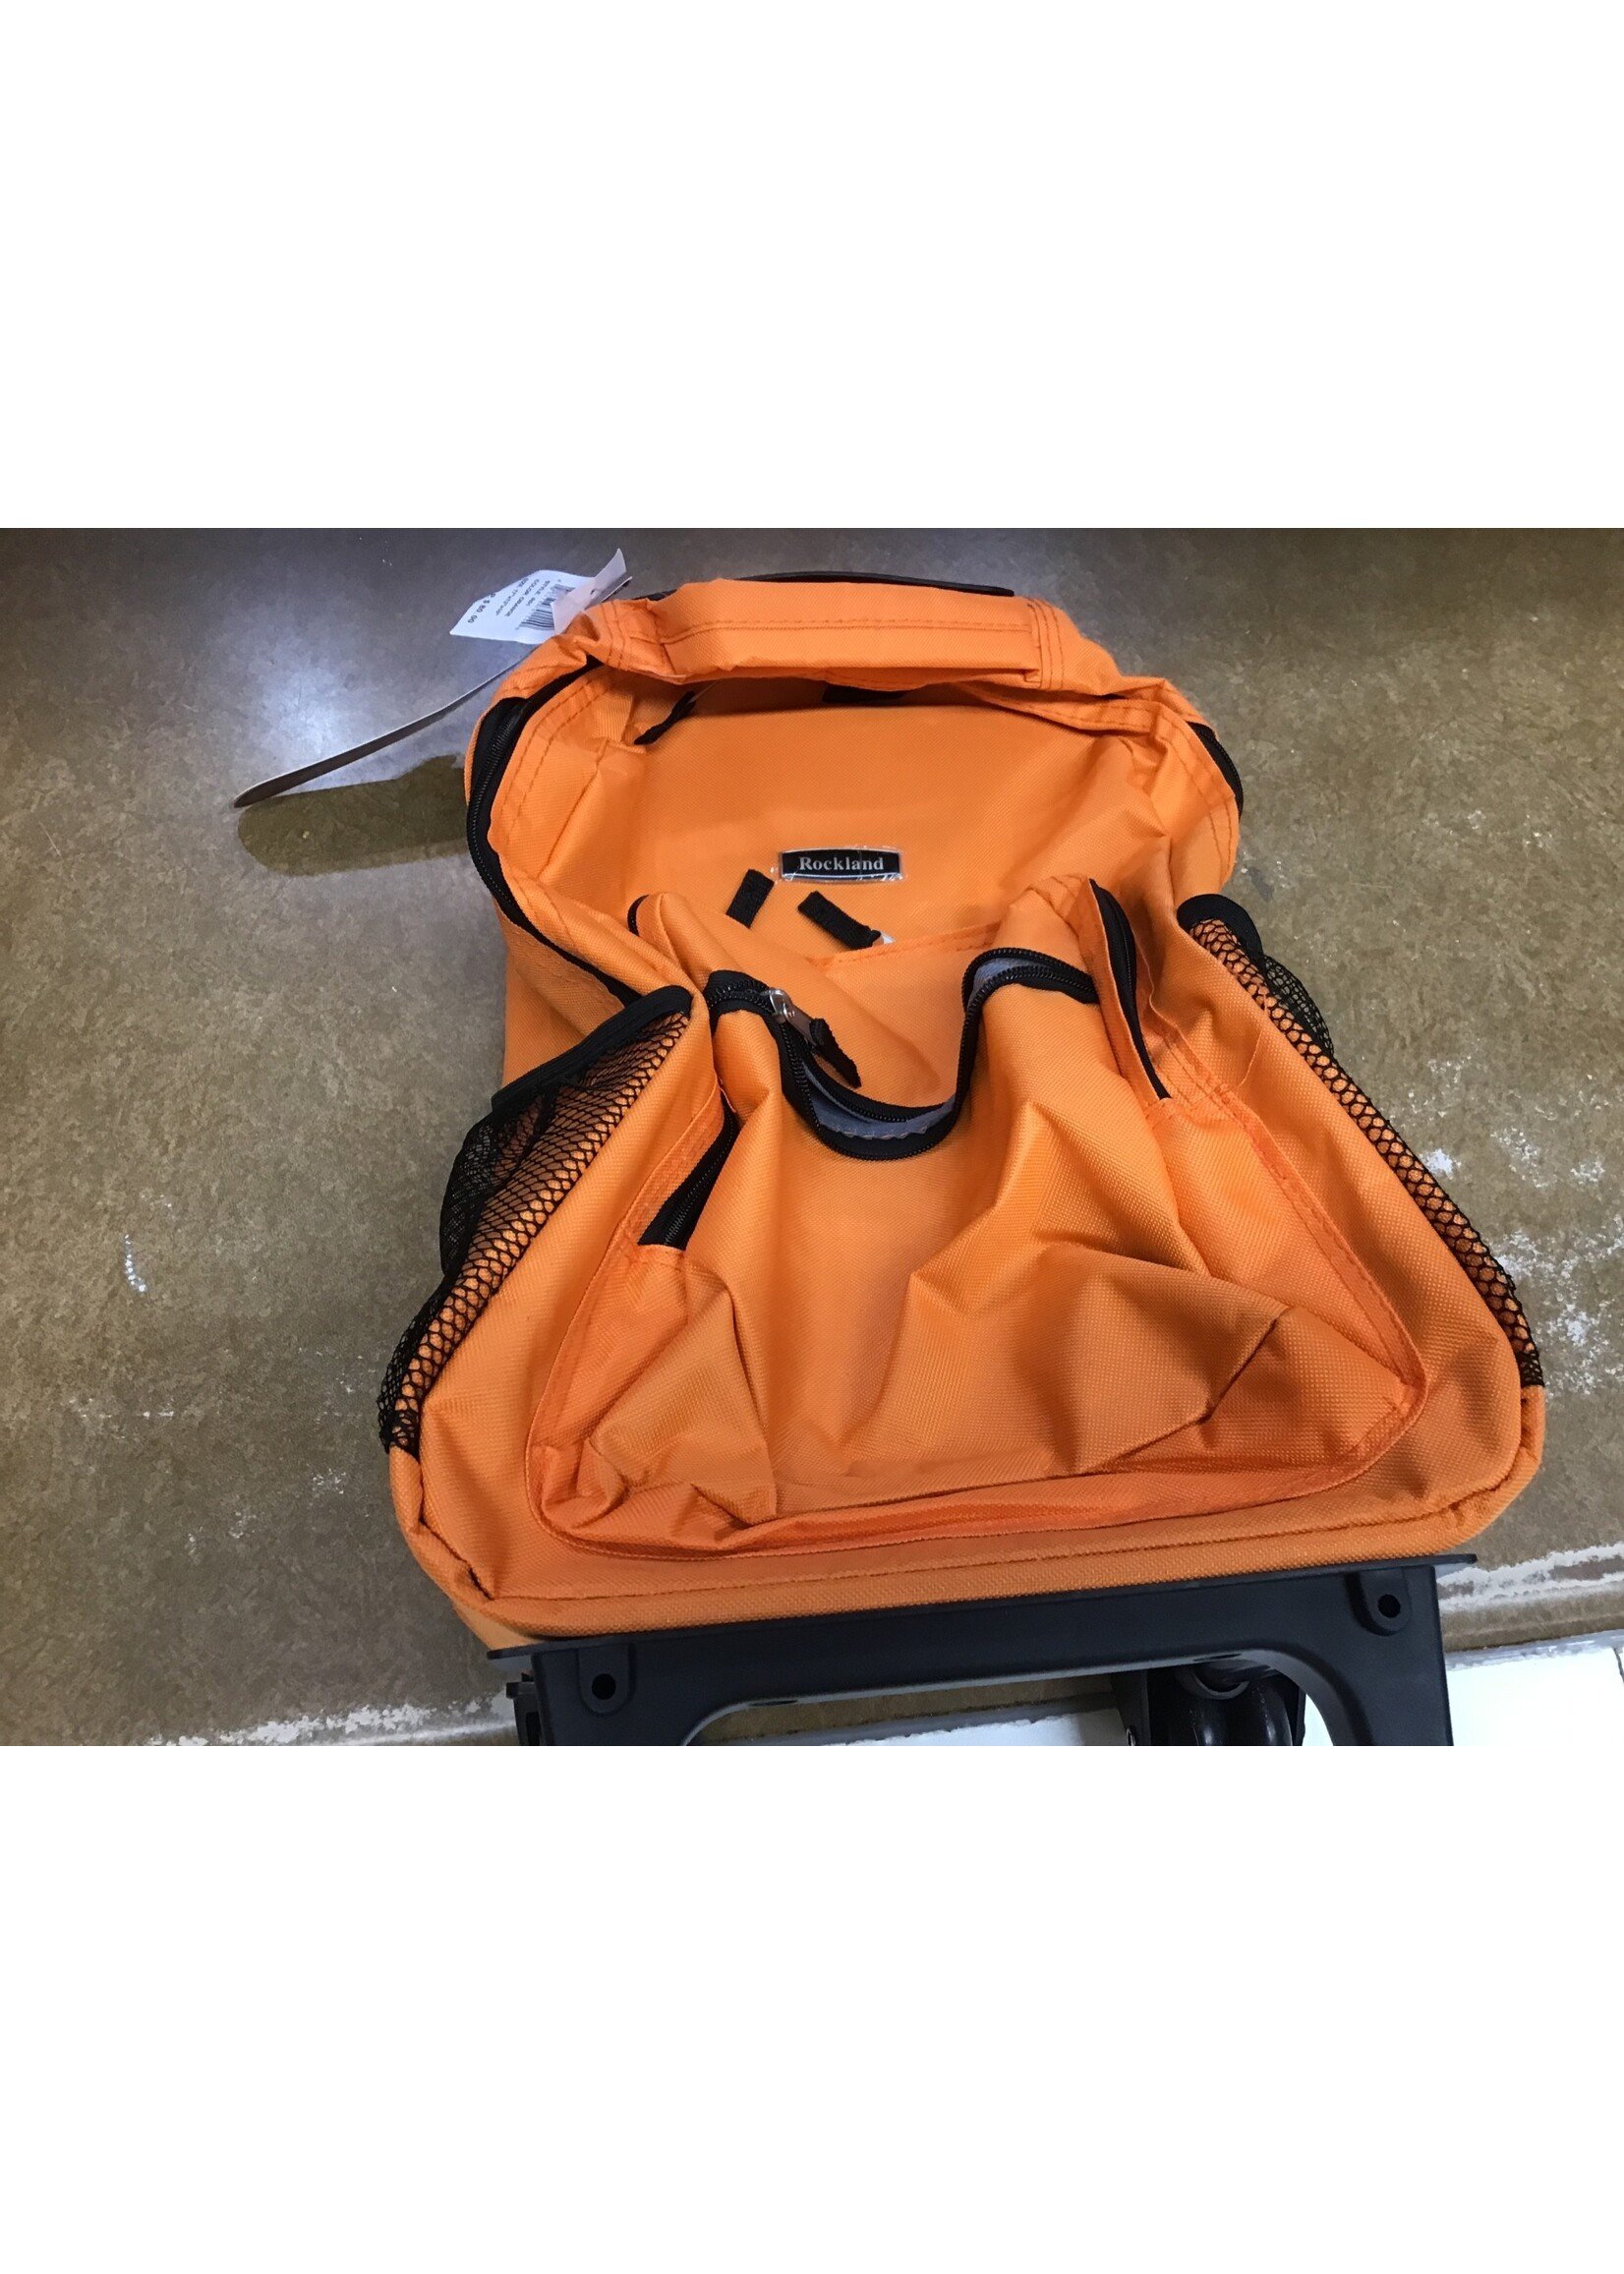 Scuf Marks on Side Rockland 17”x13”x10” backpack roller luggage orange